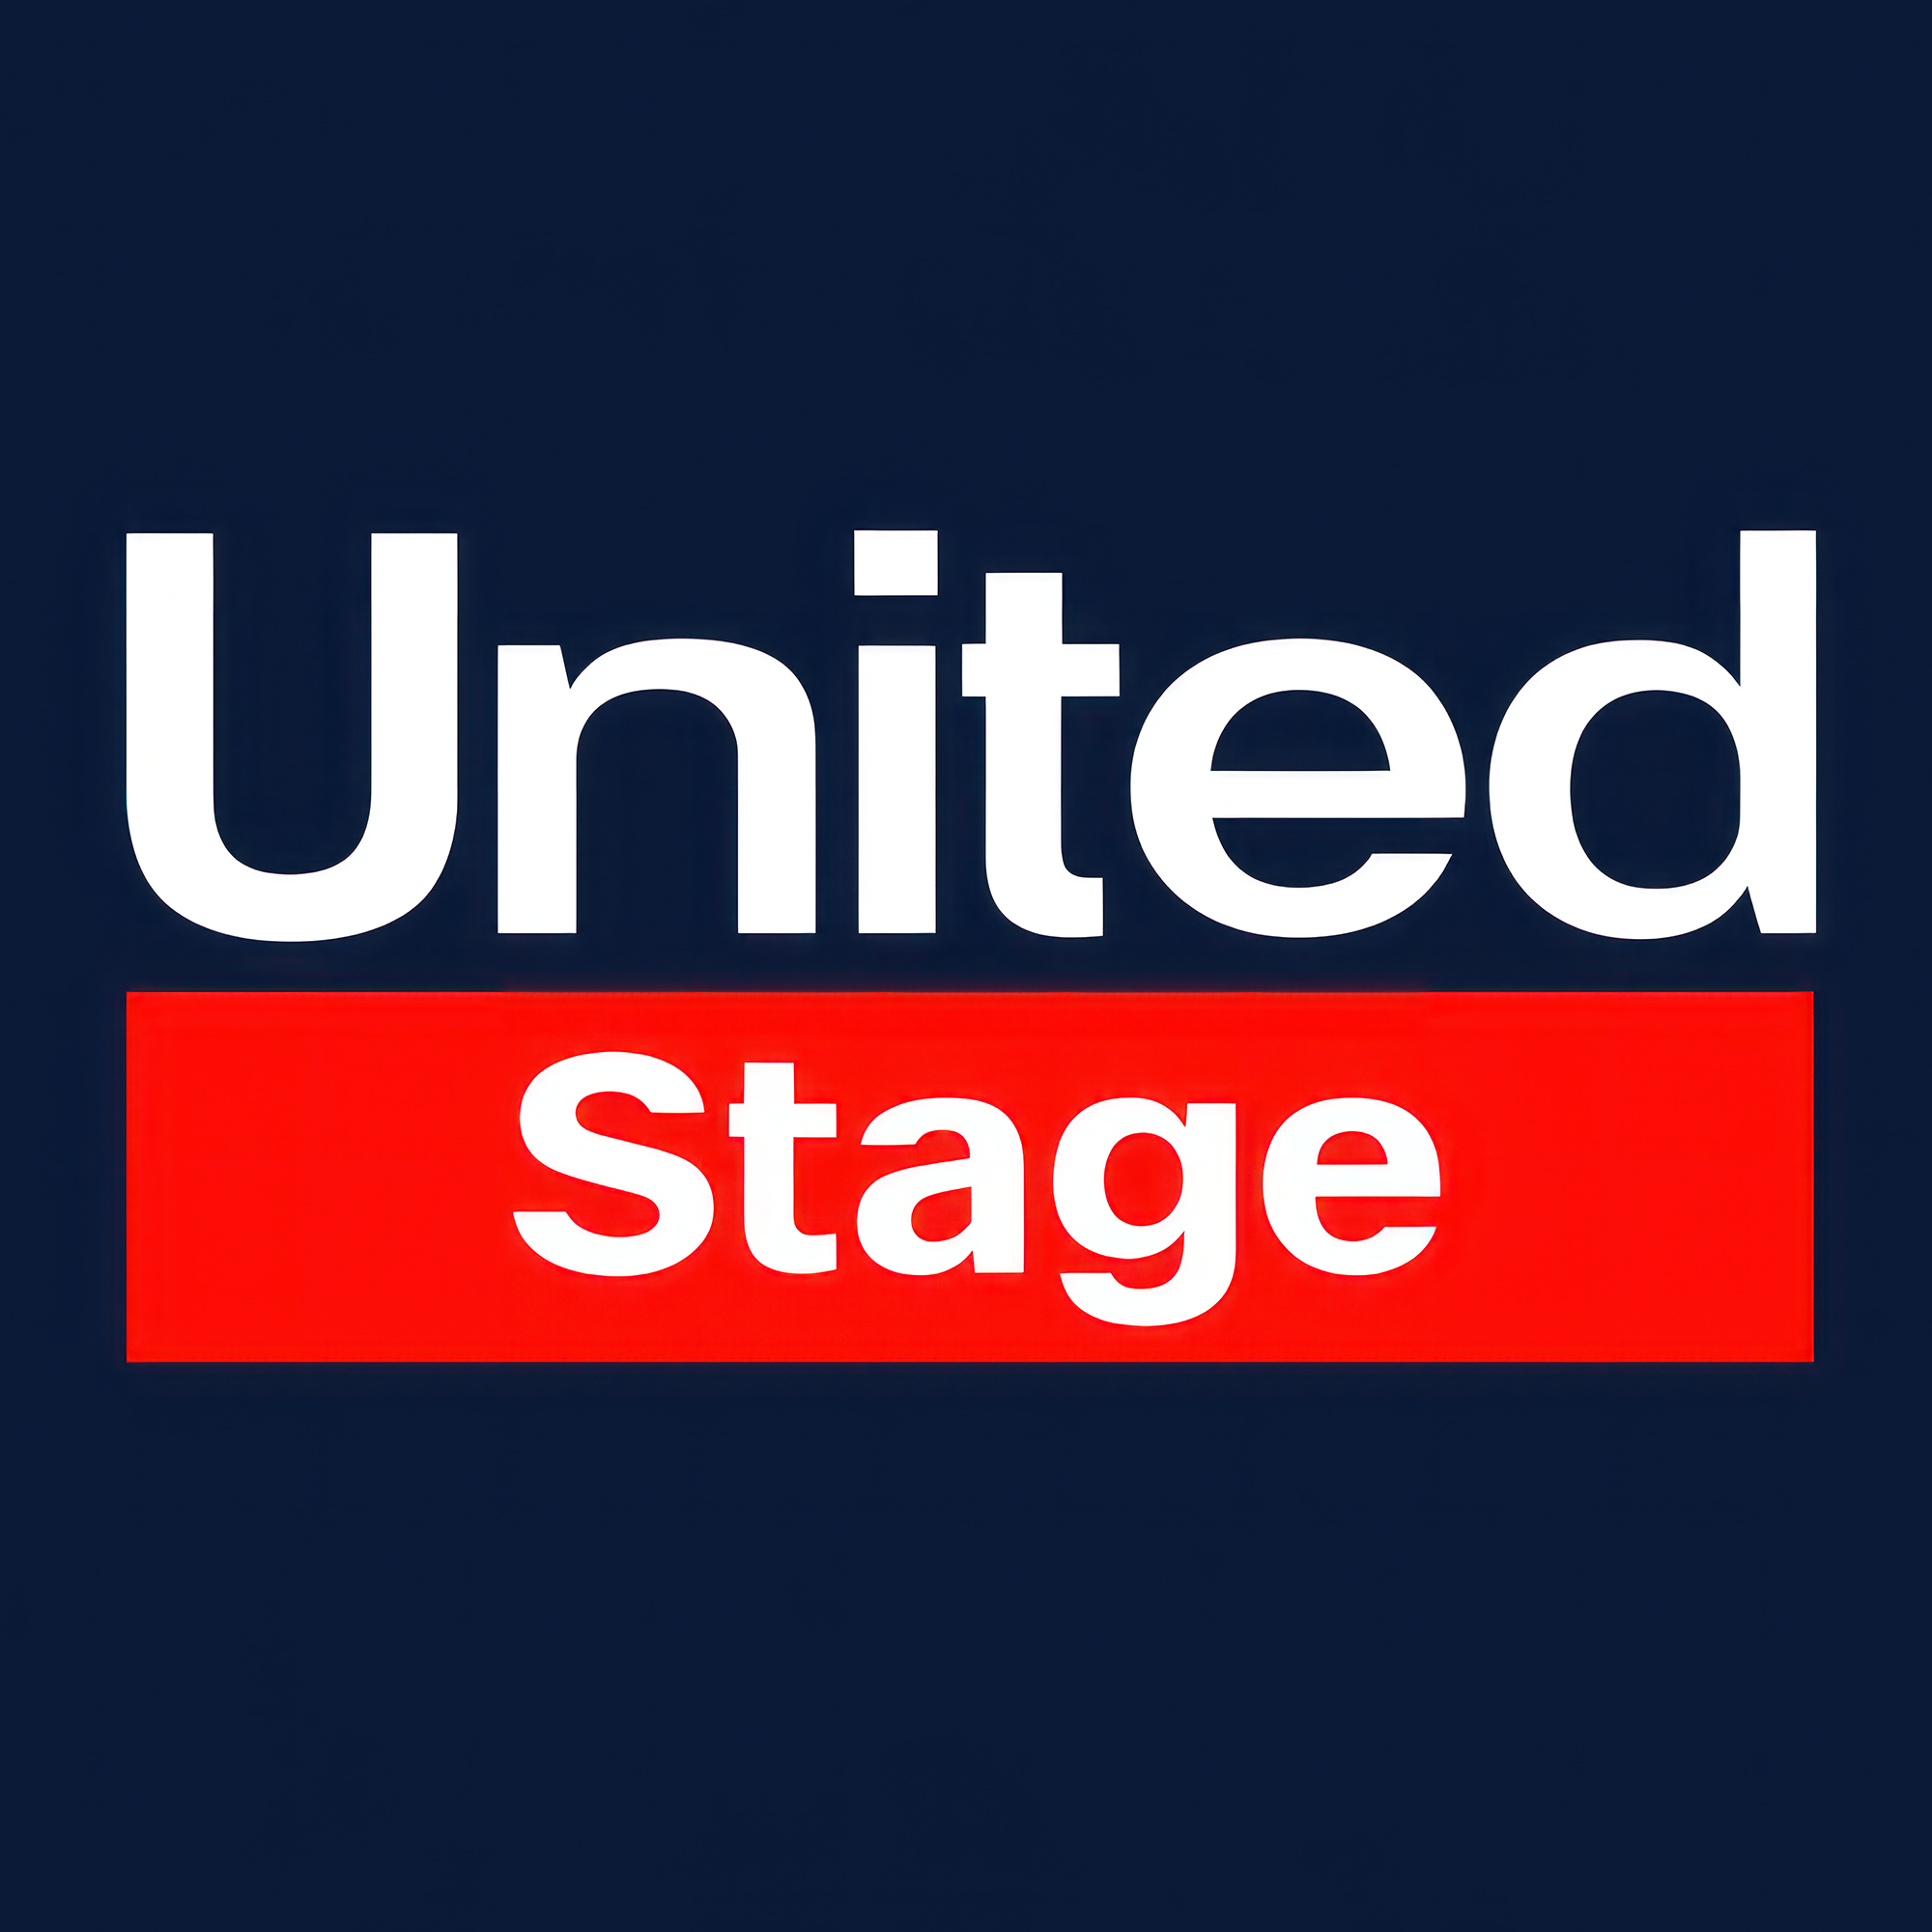 United Stage Blu Shield Logo!